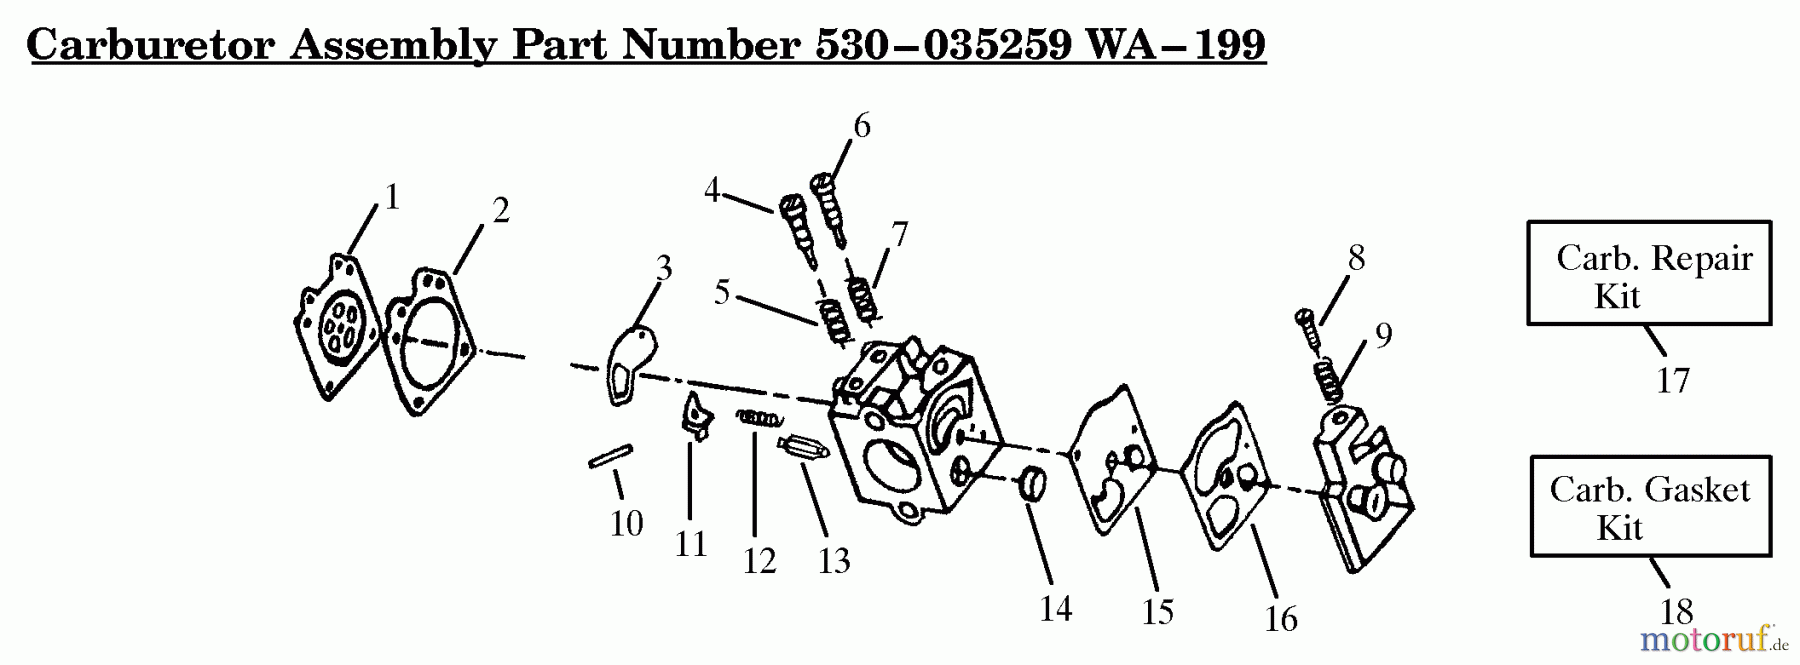  Poulan / Weed Eater Motorsensen, Trimmer HP28 - Weed Eater String Trimmer Carburetor Assembly (WA199) P/N 530035259